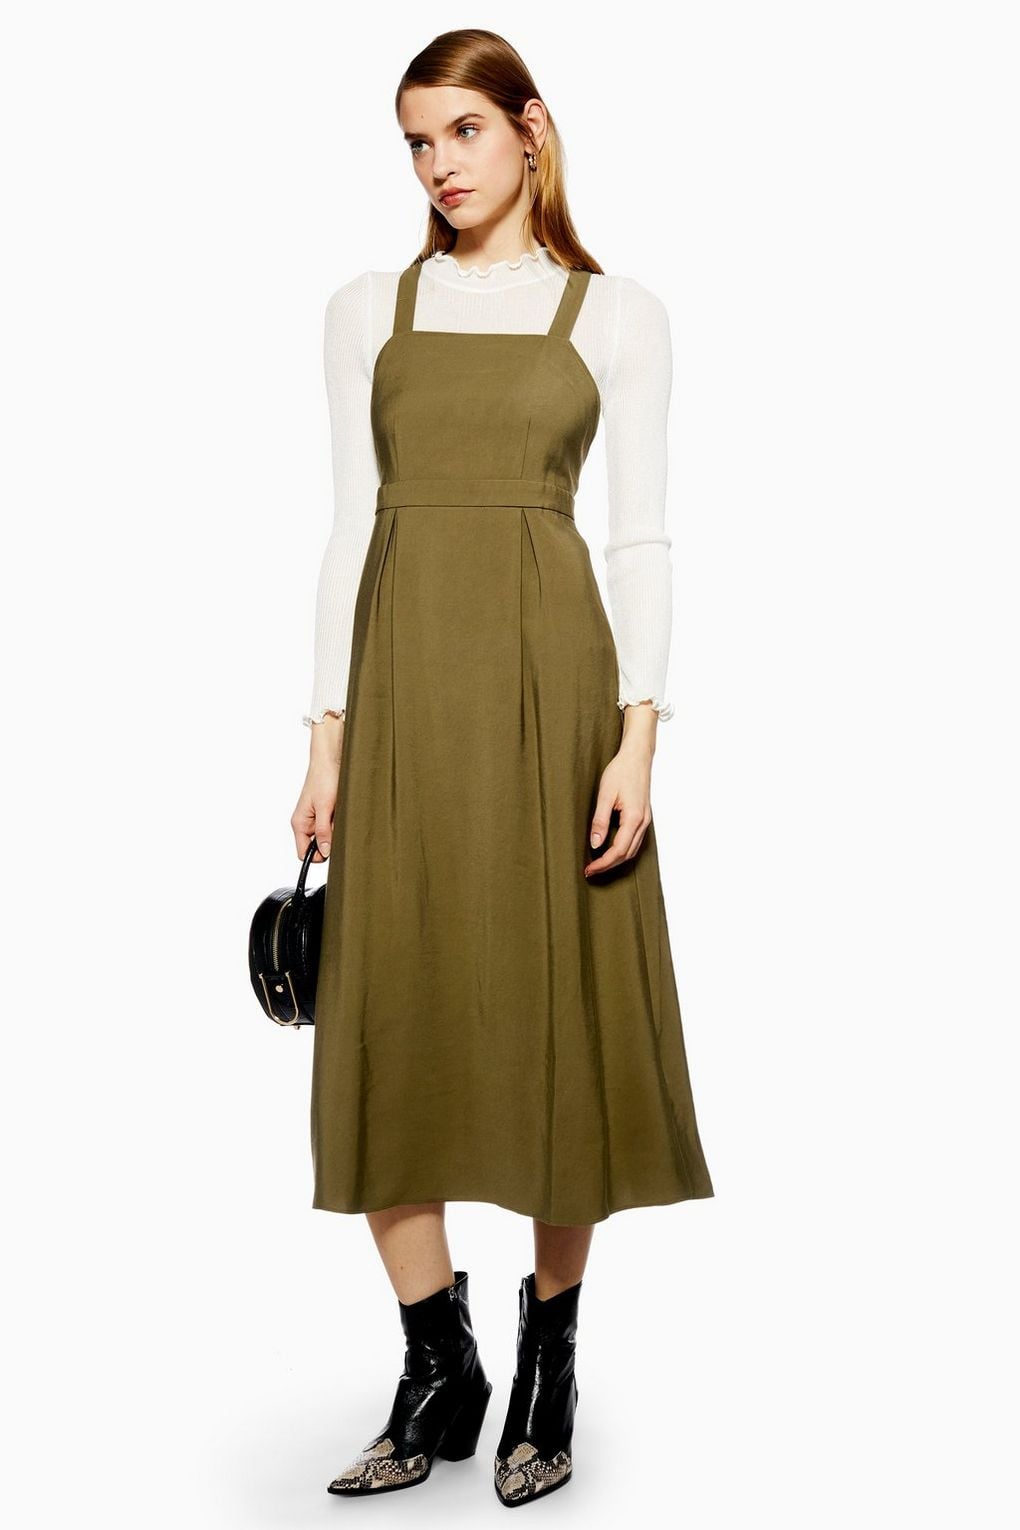 Sagton A Line Dresses for Women Regular Fit A-Line Print Pleated Dress Vintage Dress 